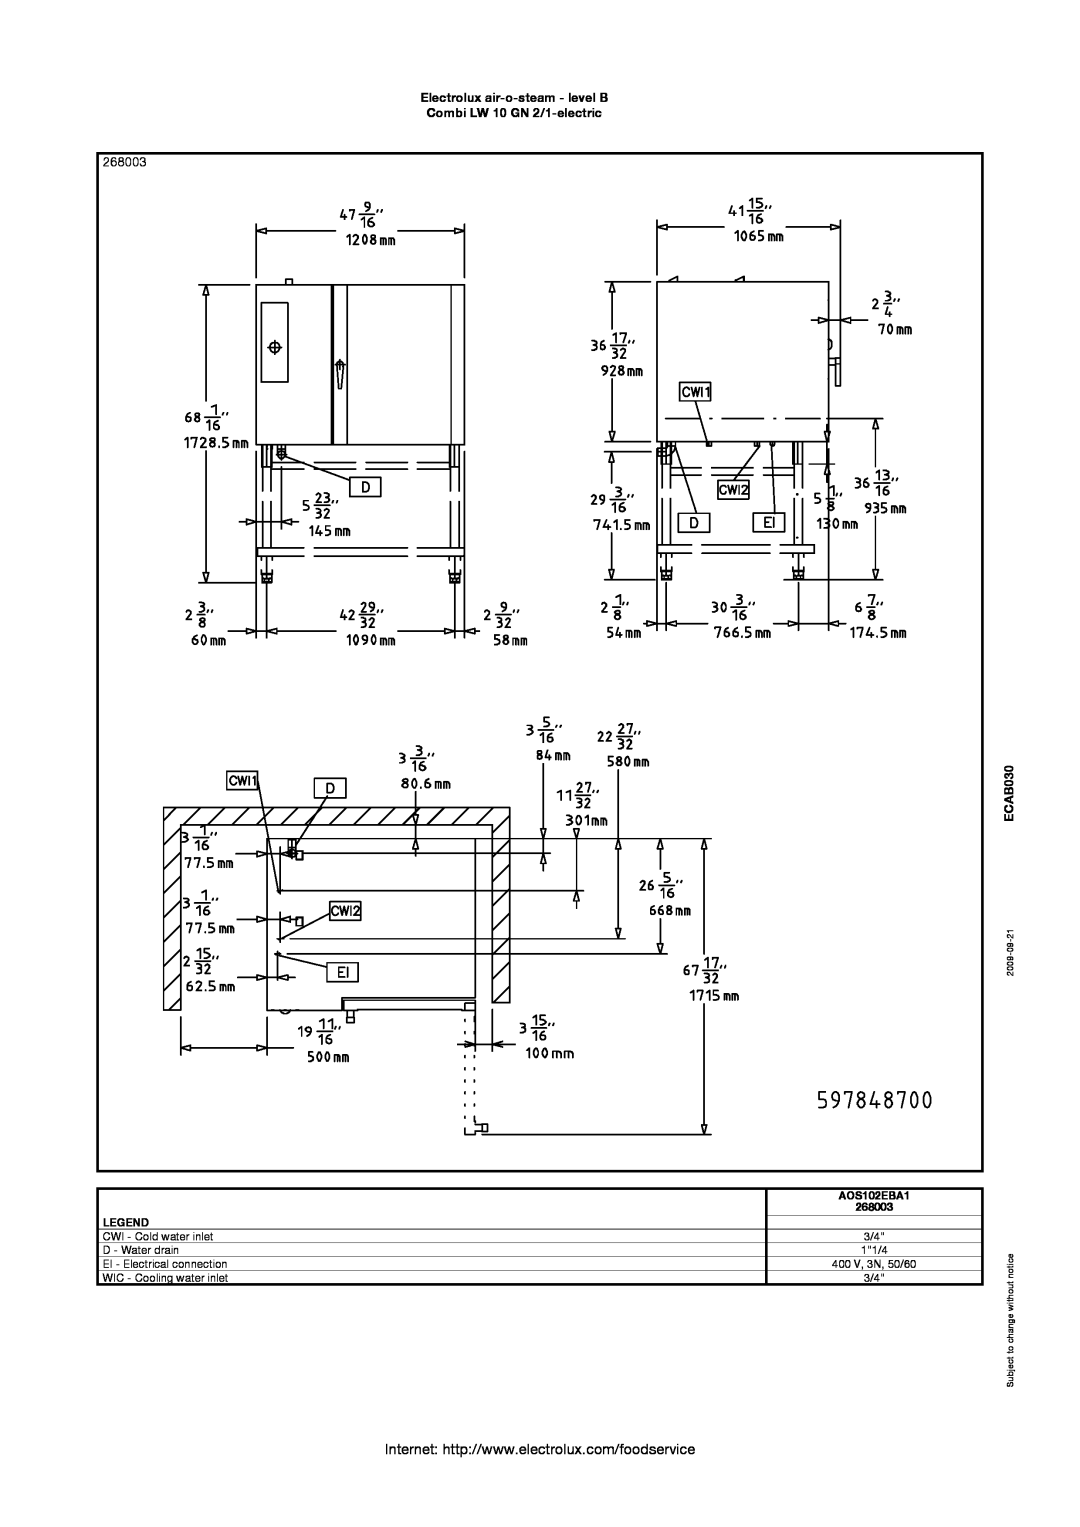 Electrolux 268003 manual Electrolux air-o-steam - level B Combi LW 10 GN 2/1-electric, ECAB030, AOS102EBA1, 2009-09-21 